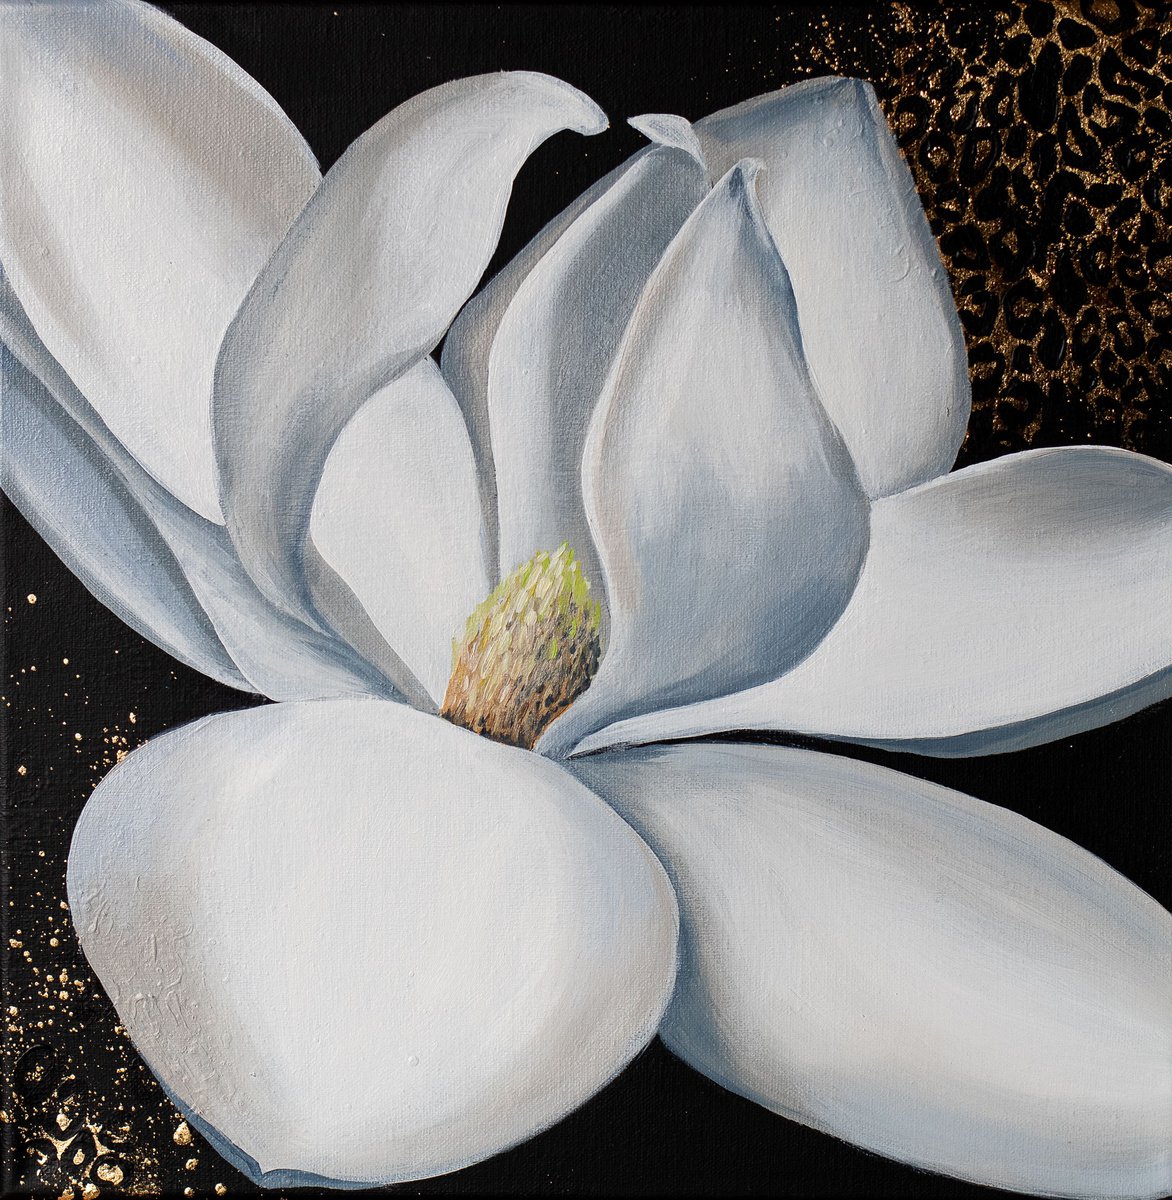 Magnolia flower / Original oil painting / flowers / modern art / gift idea by Daria Shalik